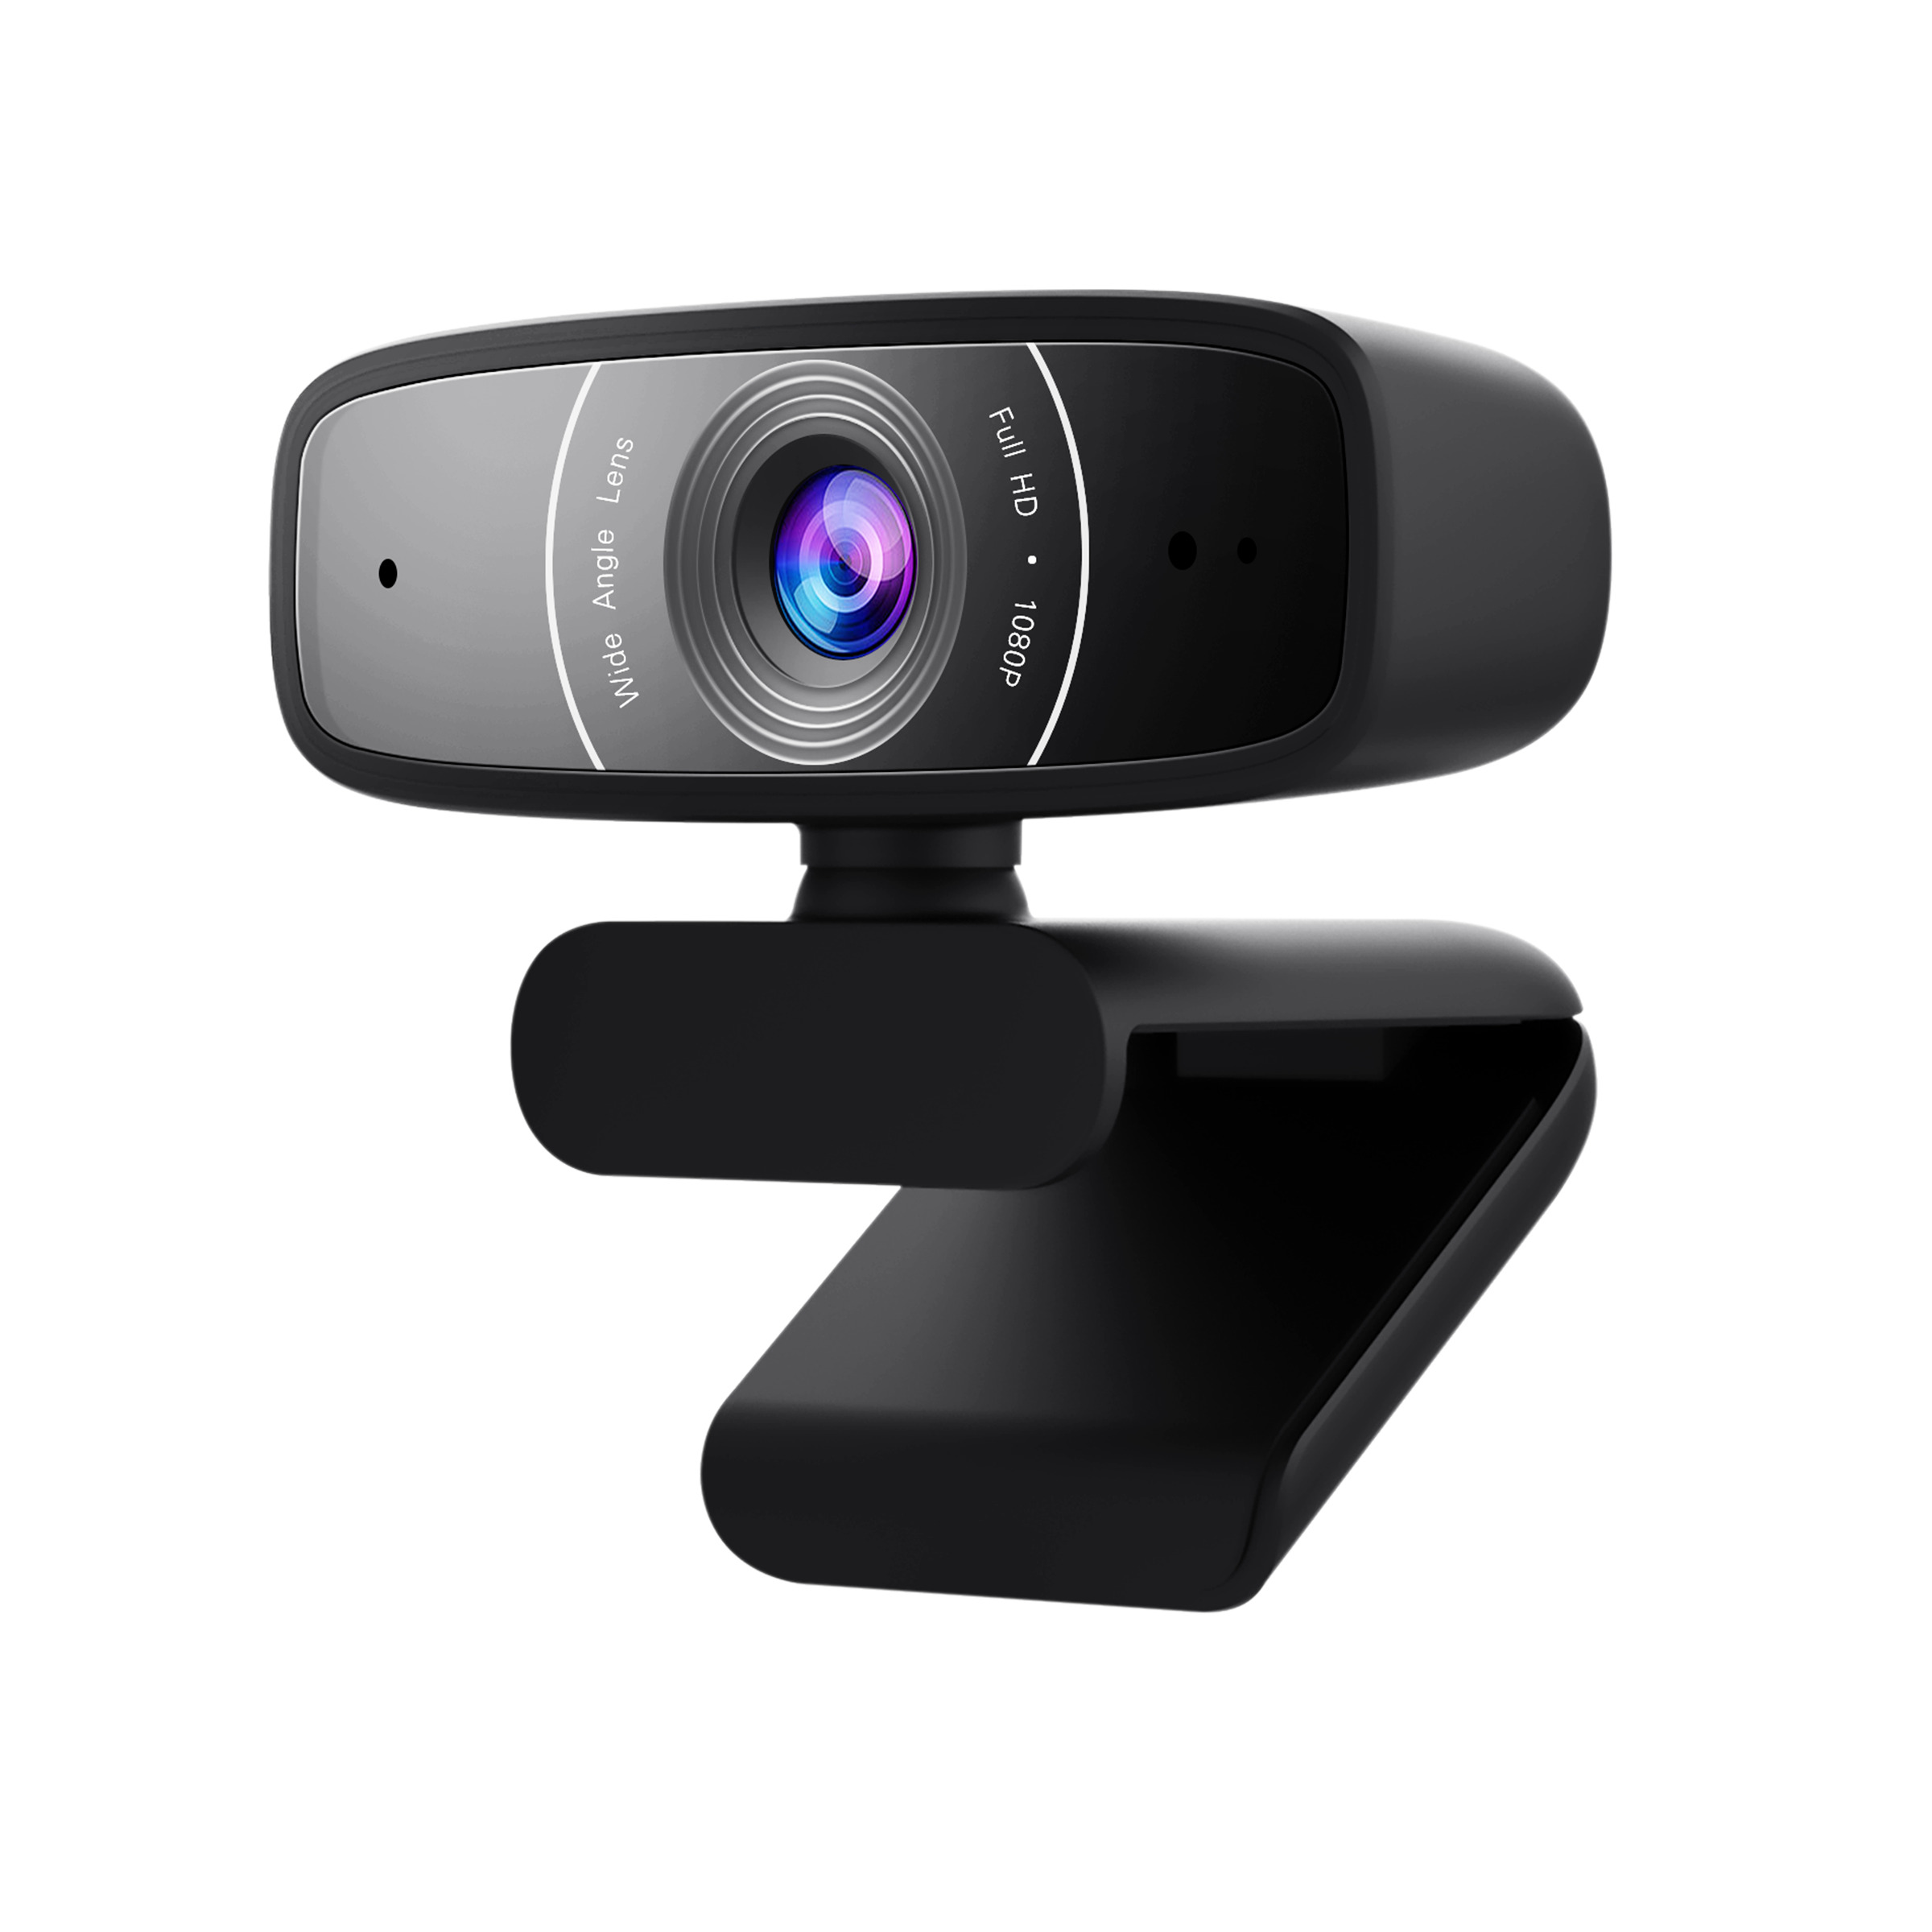 Webcam Asus C3 FHD 1080p